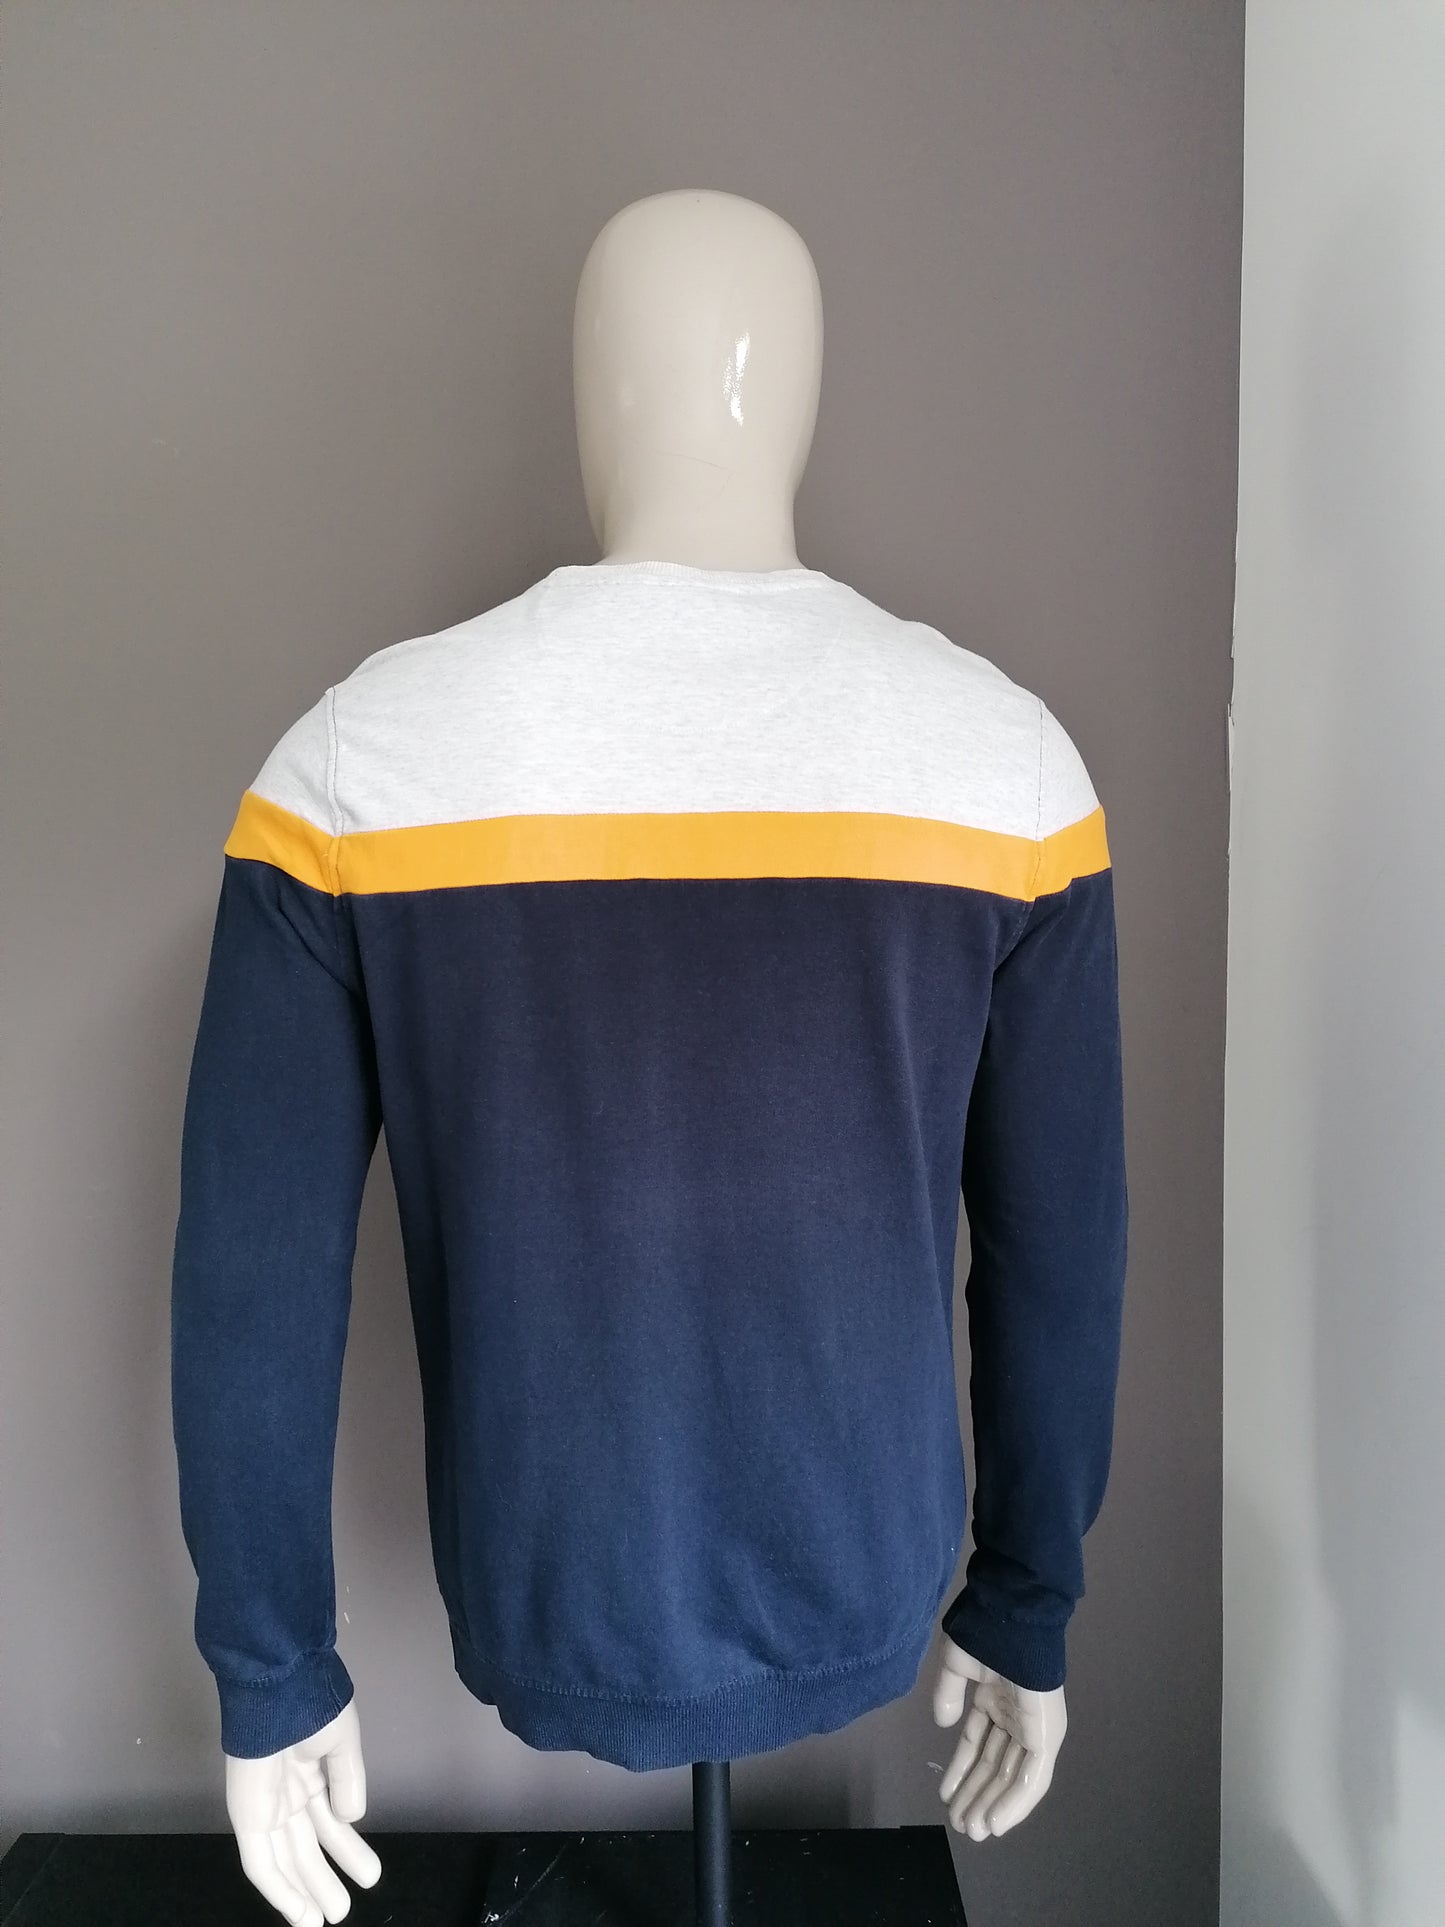 Suéter de recarga. Azul amarillo gris de color. Tamaño S / m